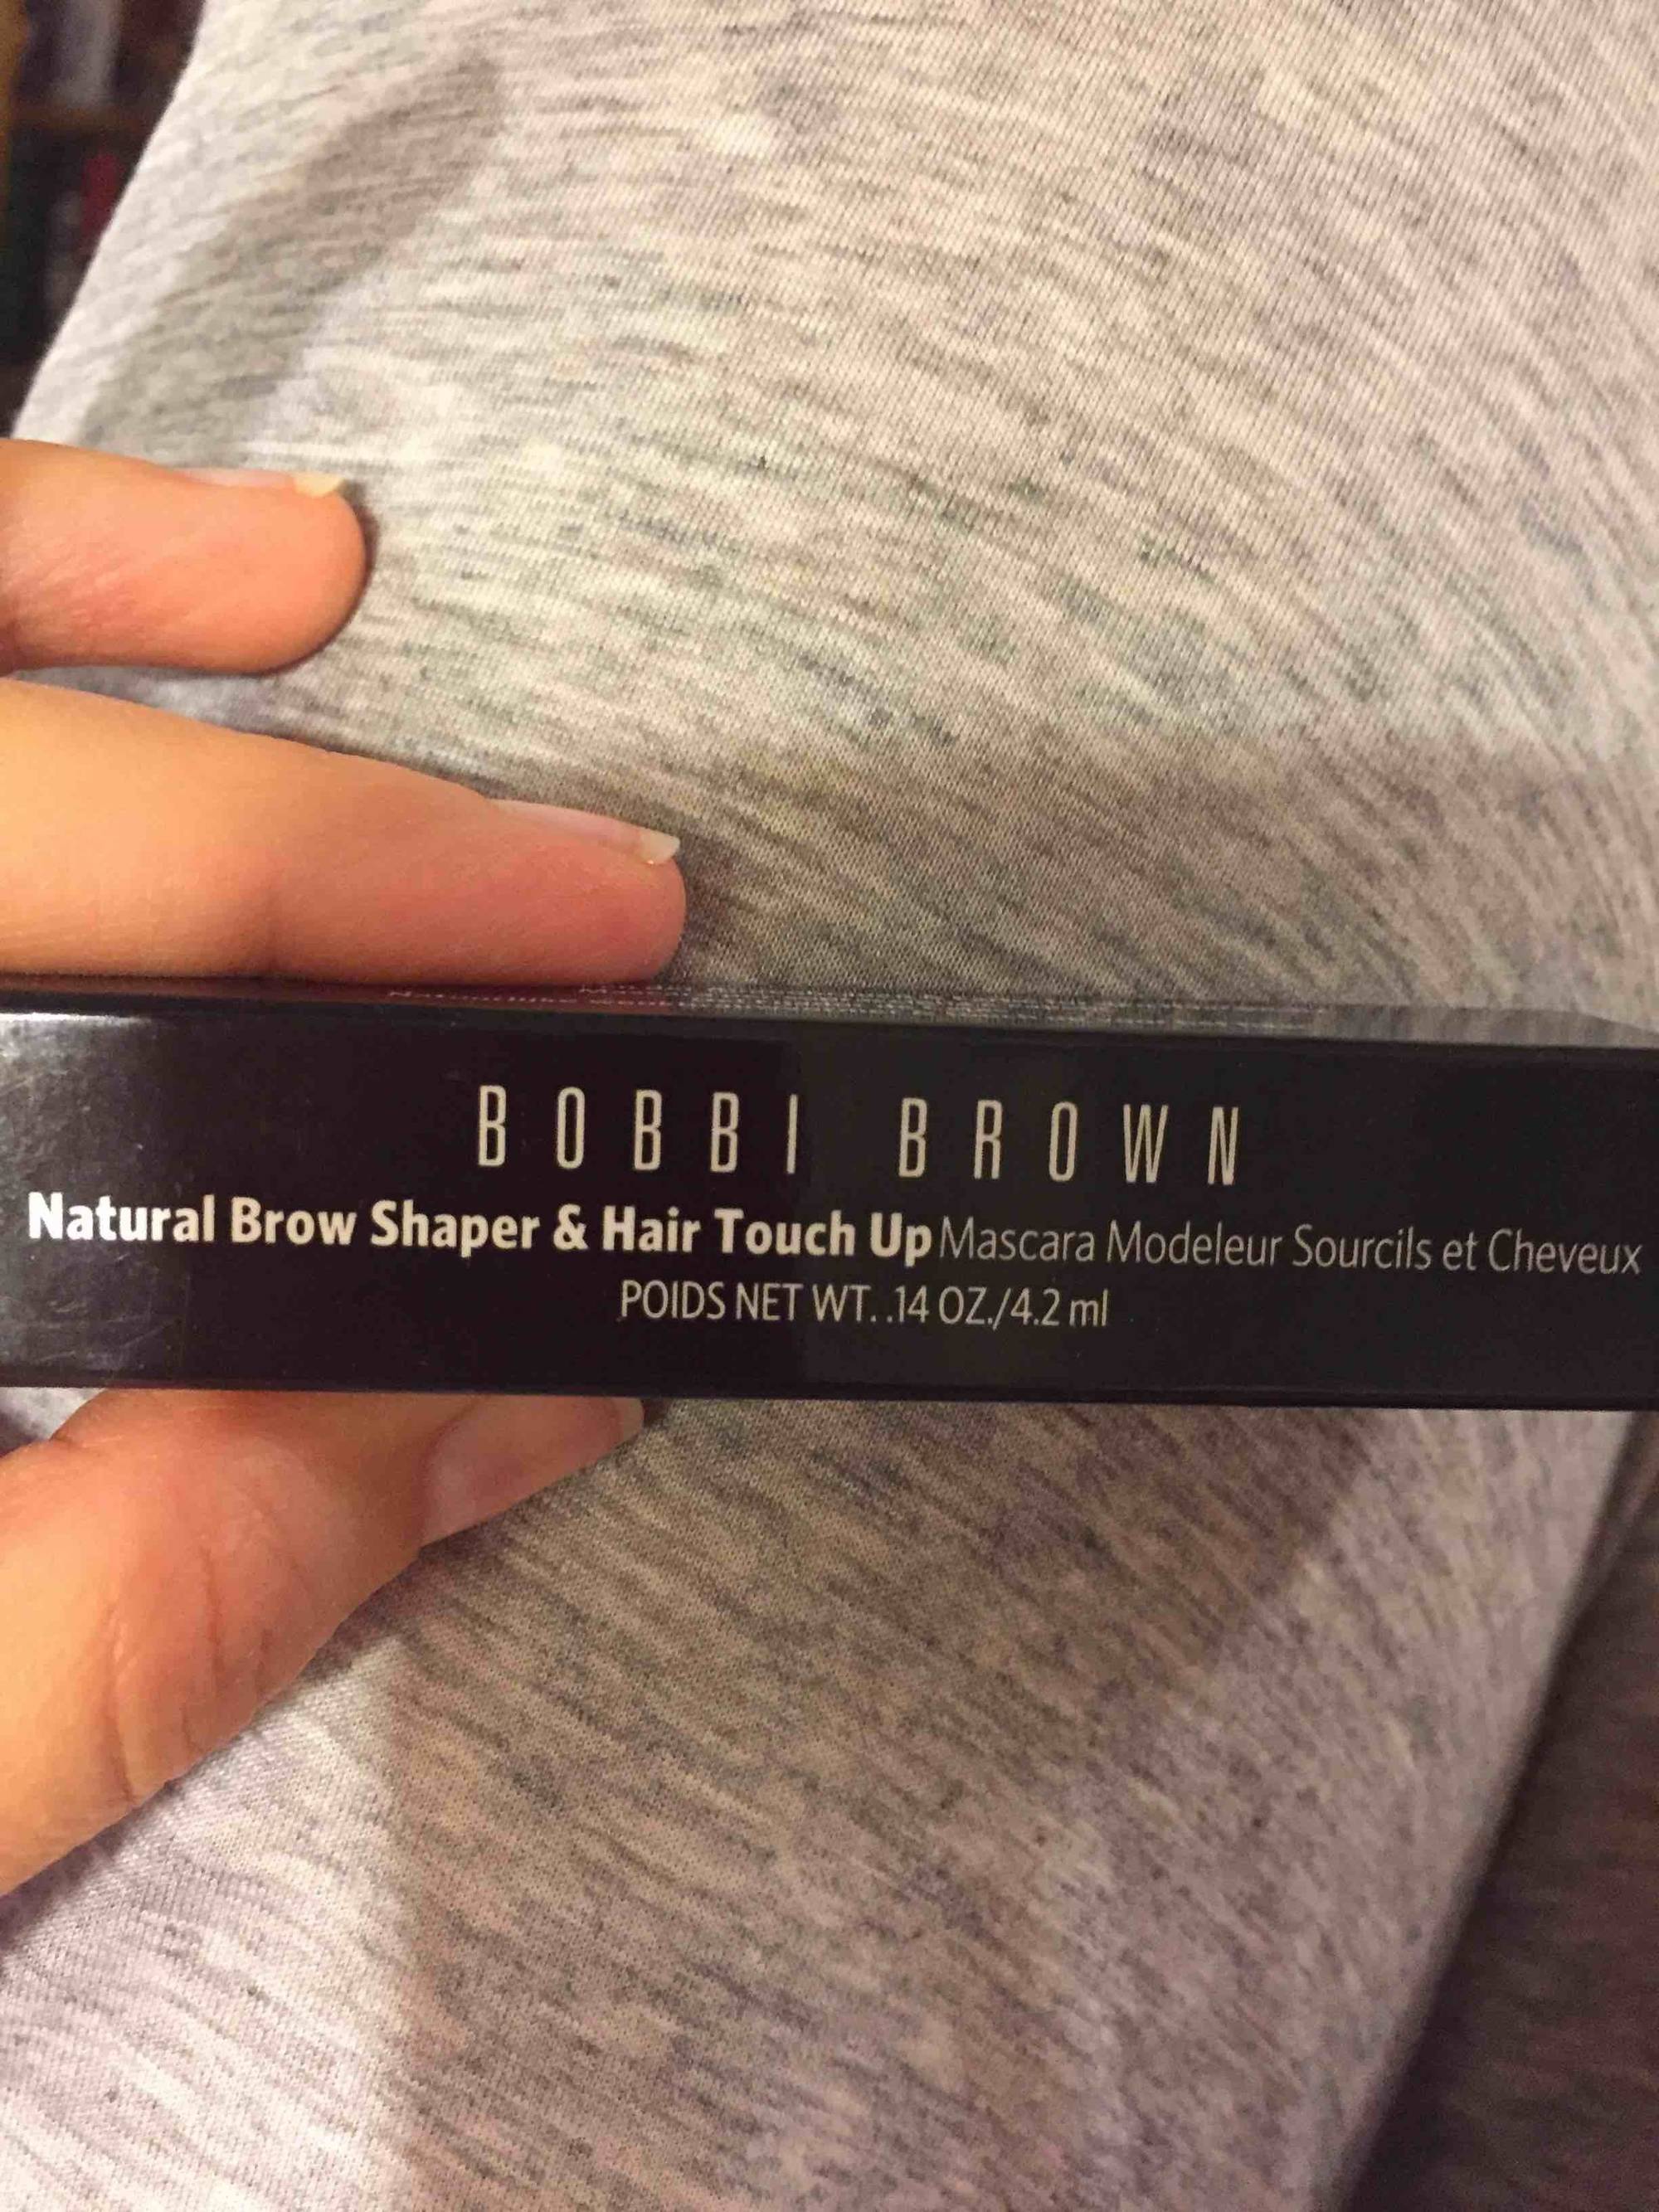 BOBBI BROWN - Mascara modeleur sourcils et cheveux